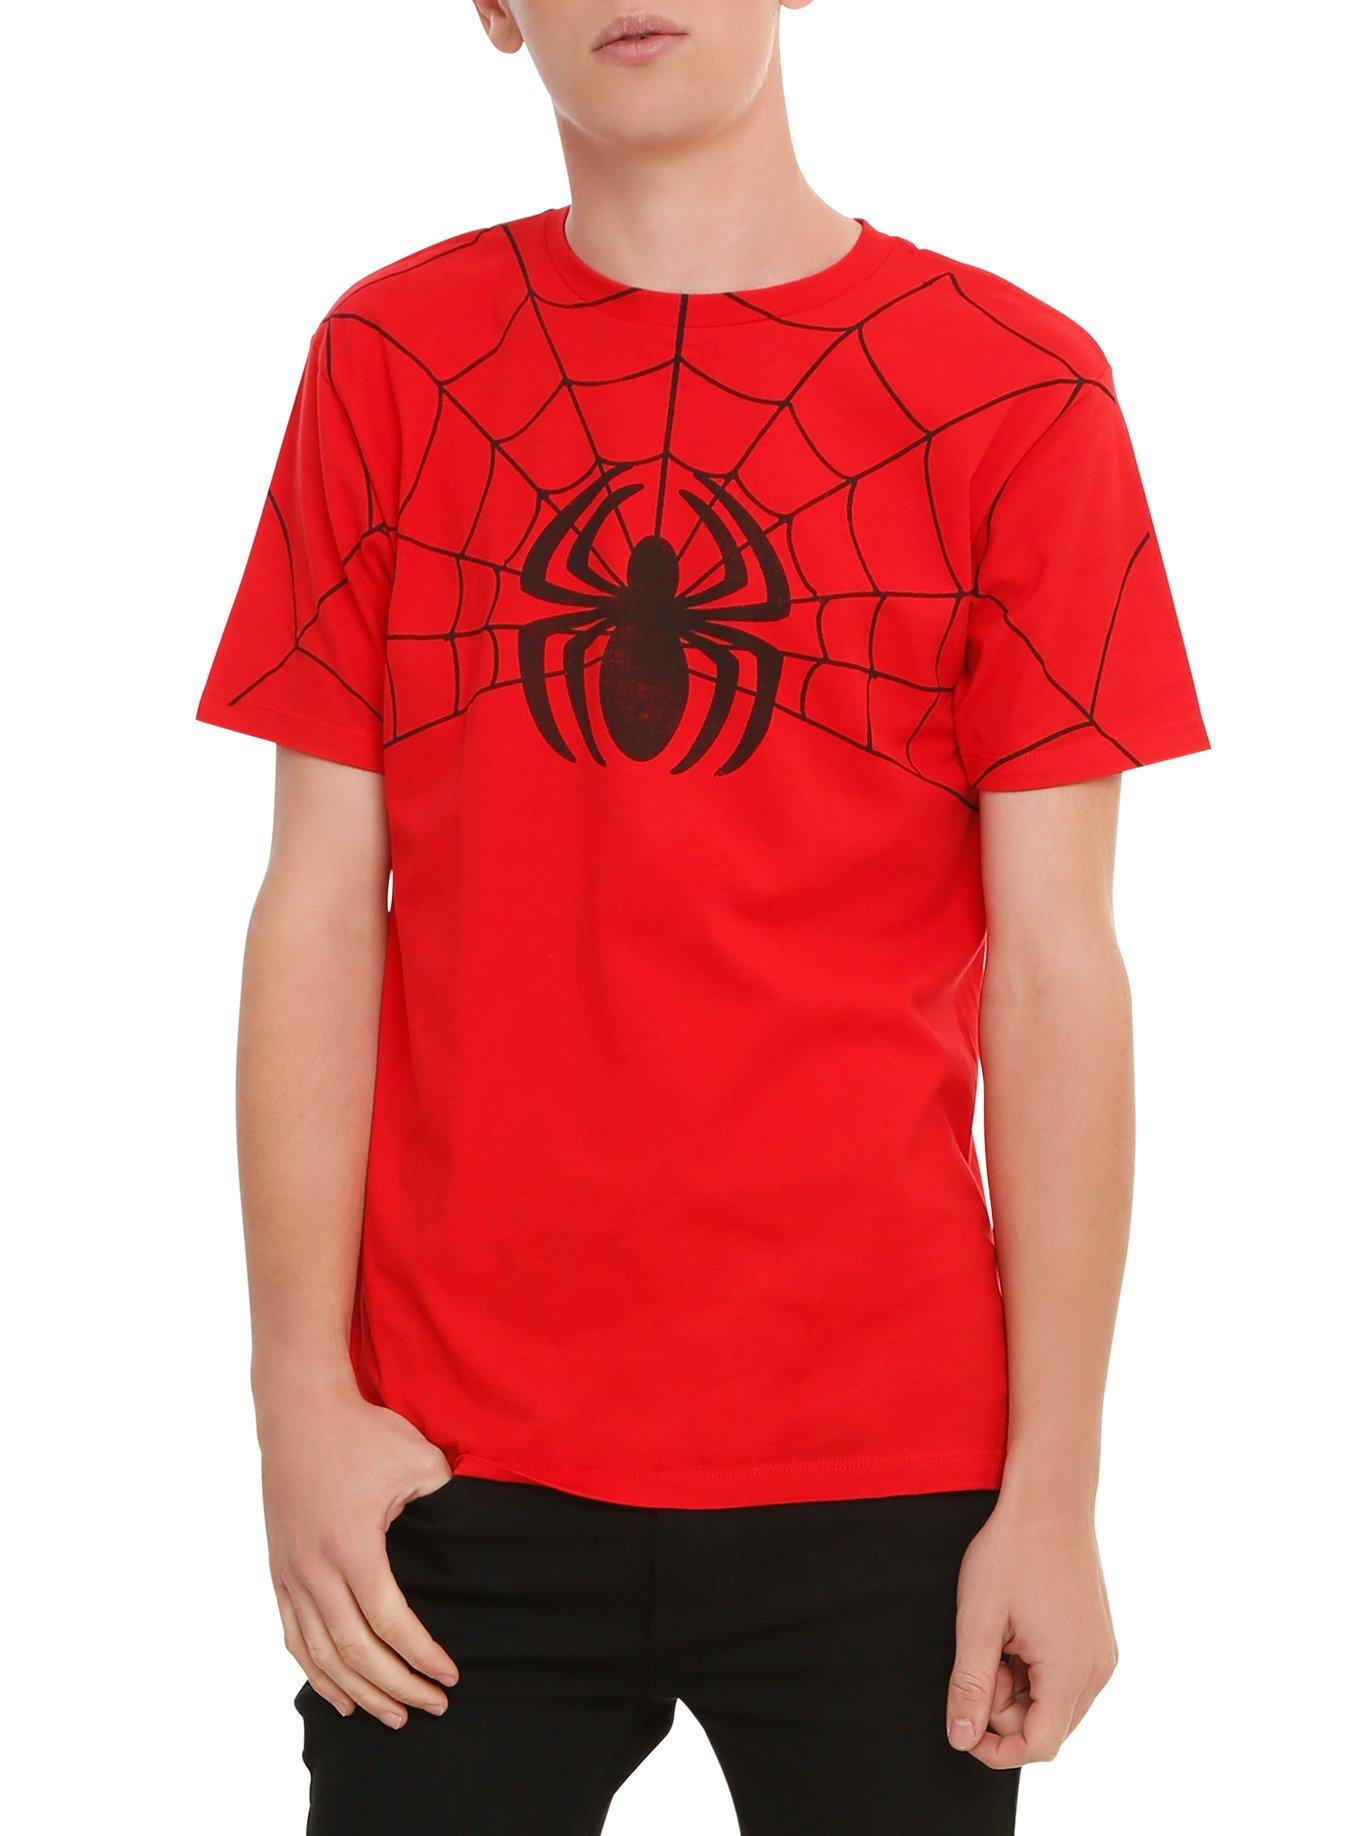 Logo Classic Hot Marvel T-Shirt Spider-Man | Web Topic